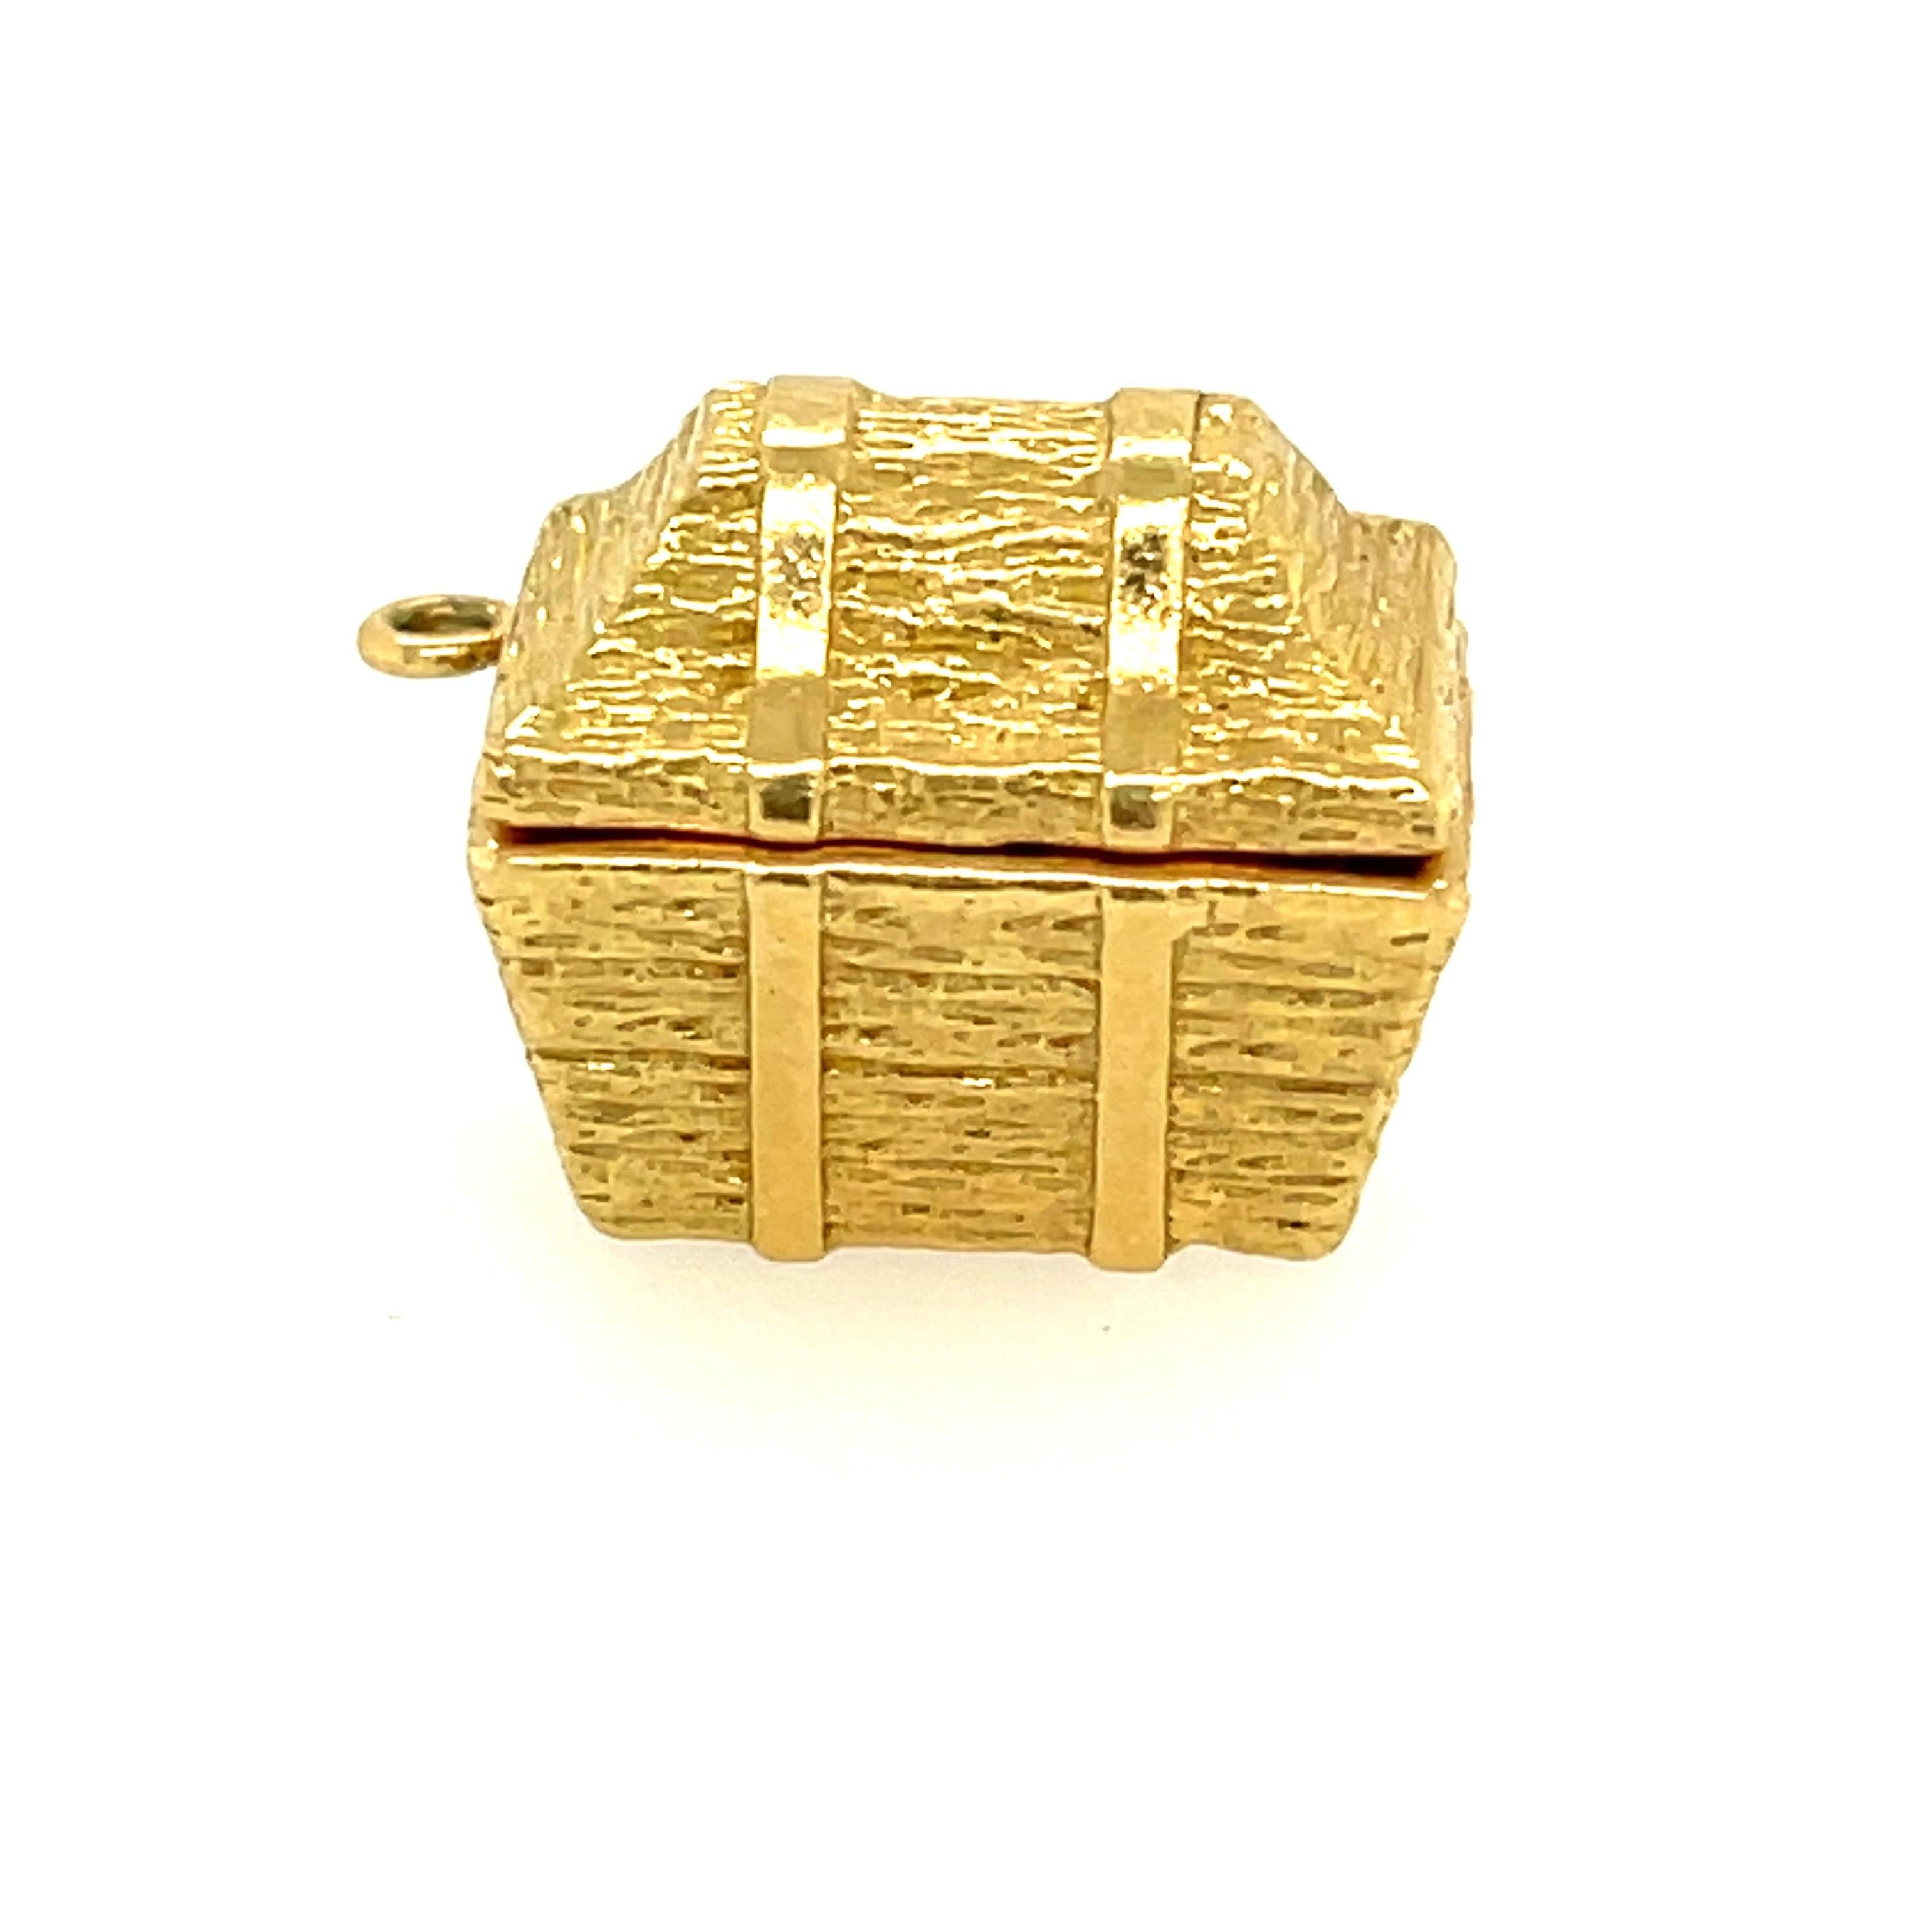 Vintage Tiffany & Co. 18 Karat Gold Treasure Chest Charm with Gems 1